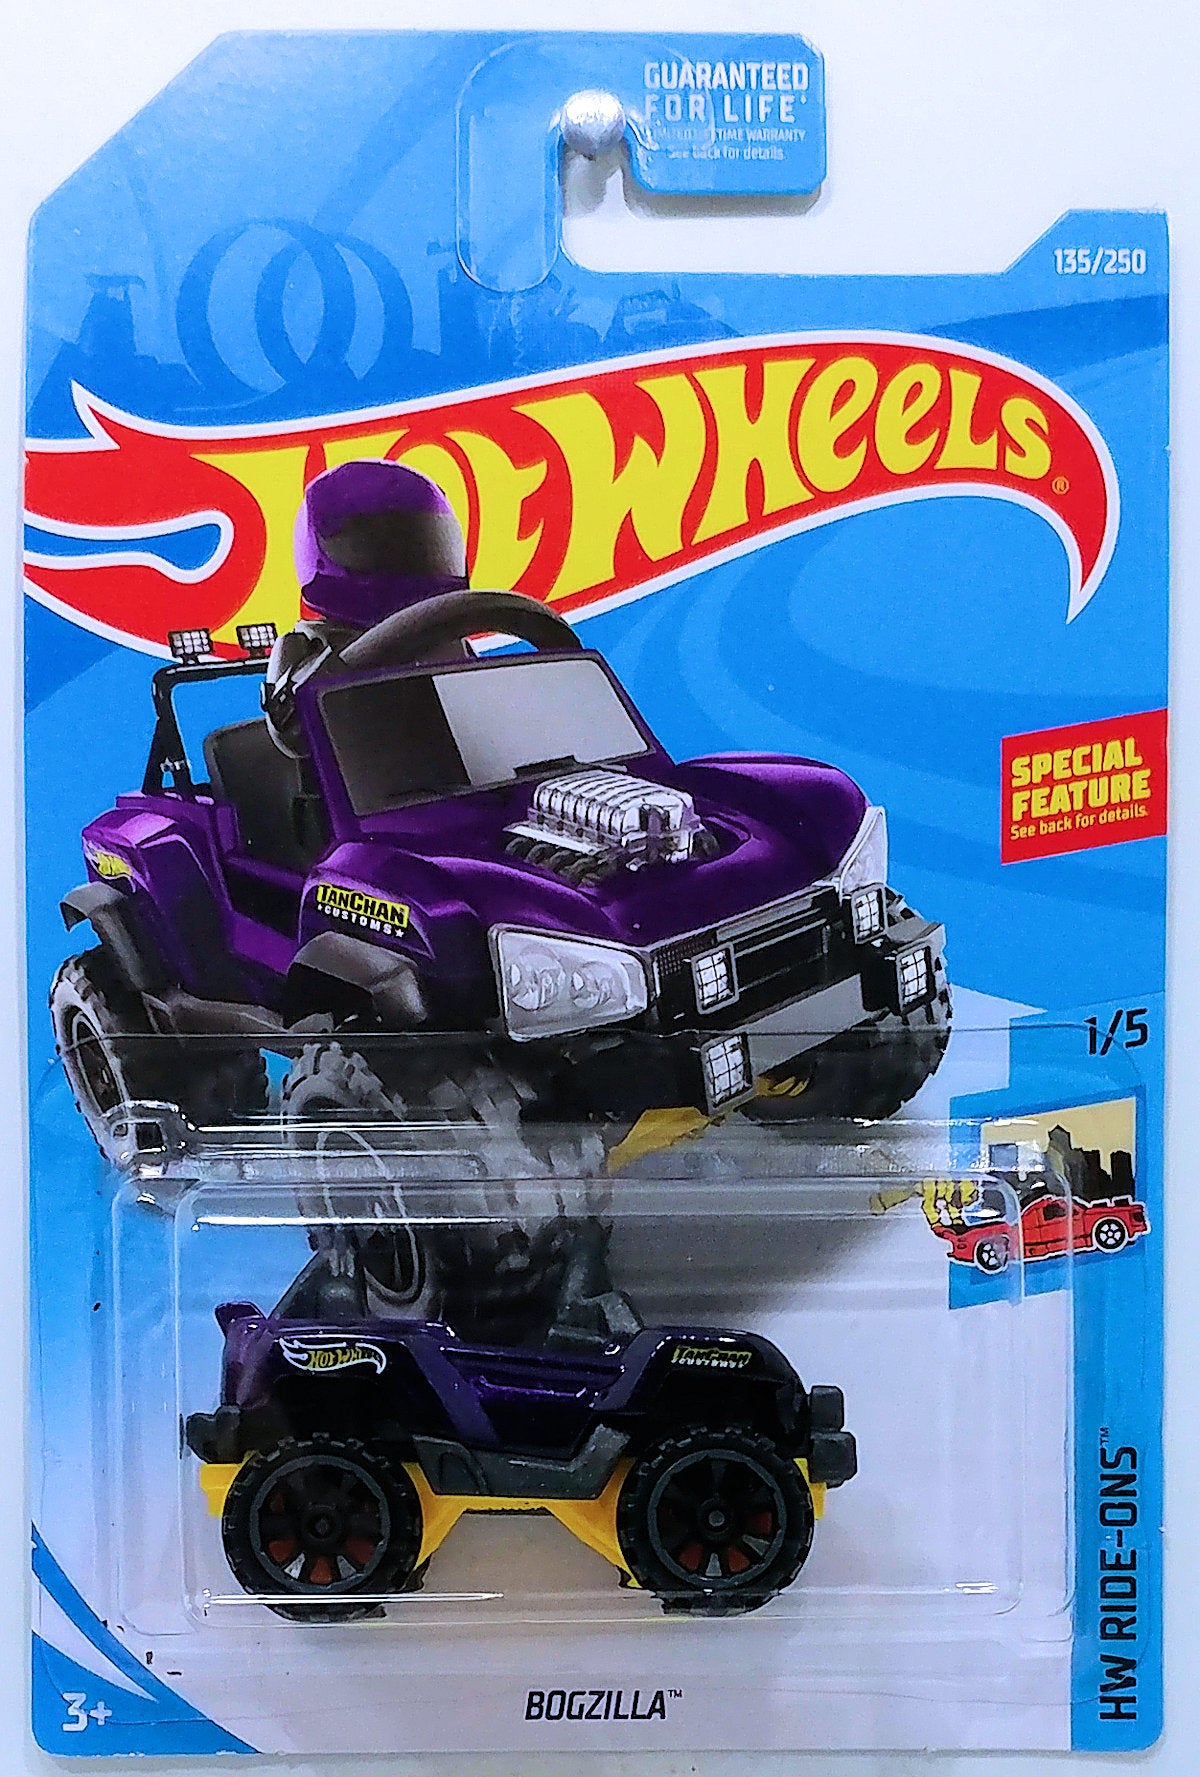 Hot Wheels 2019 - Collector # 135/250 - HW Ride-Ons 1/5 - Bogzilla - Purple